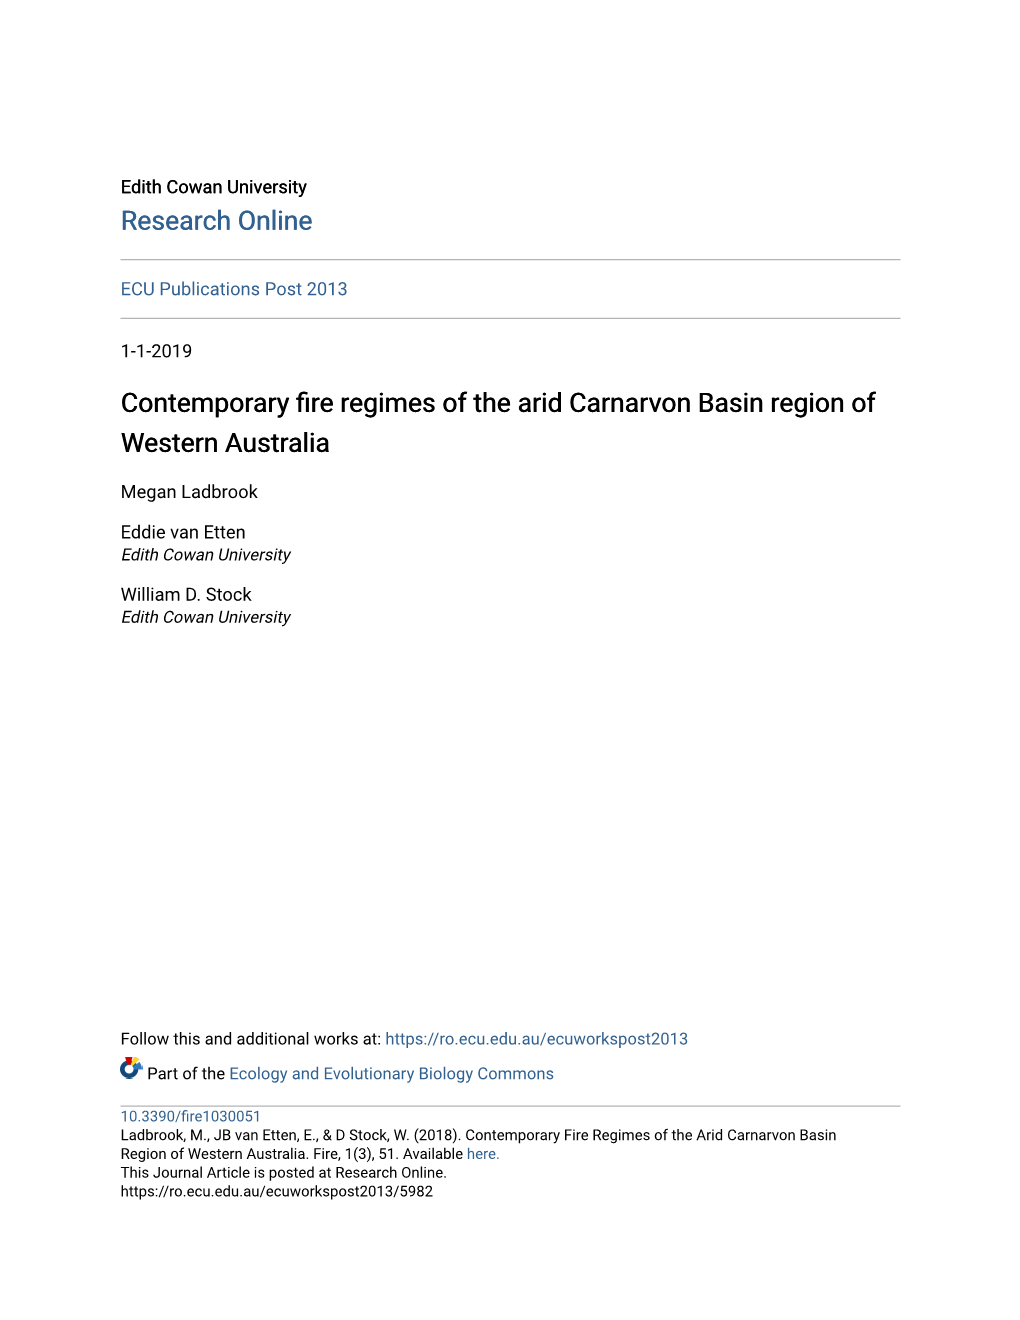 Contemporary Fire Regimes of the Arid Carnarvon Basin Region of Western Australia